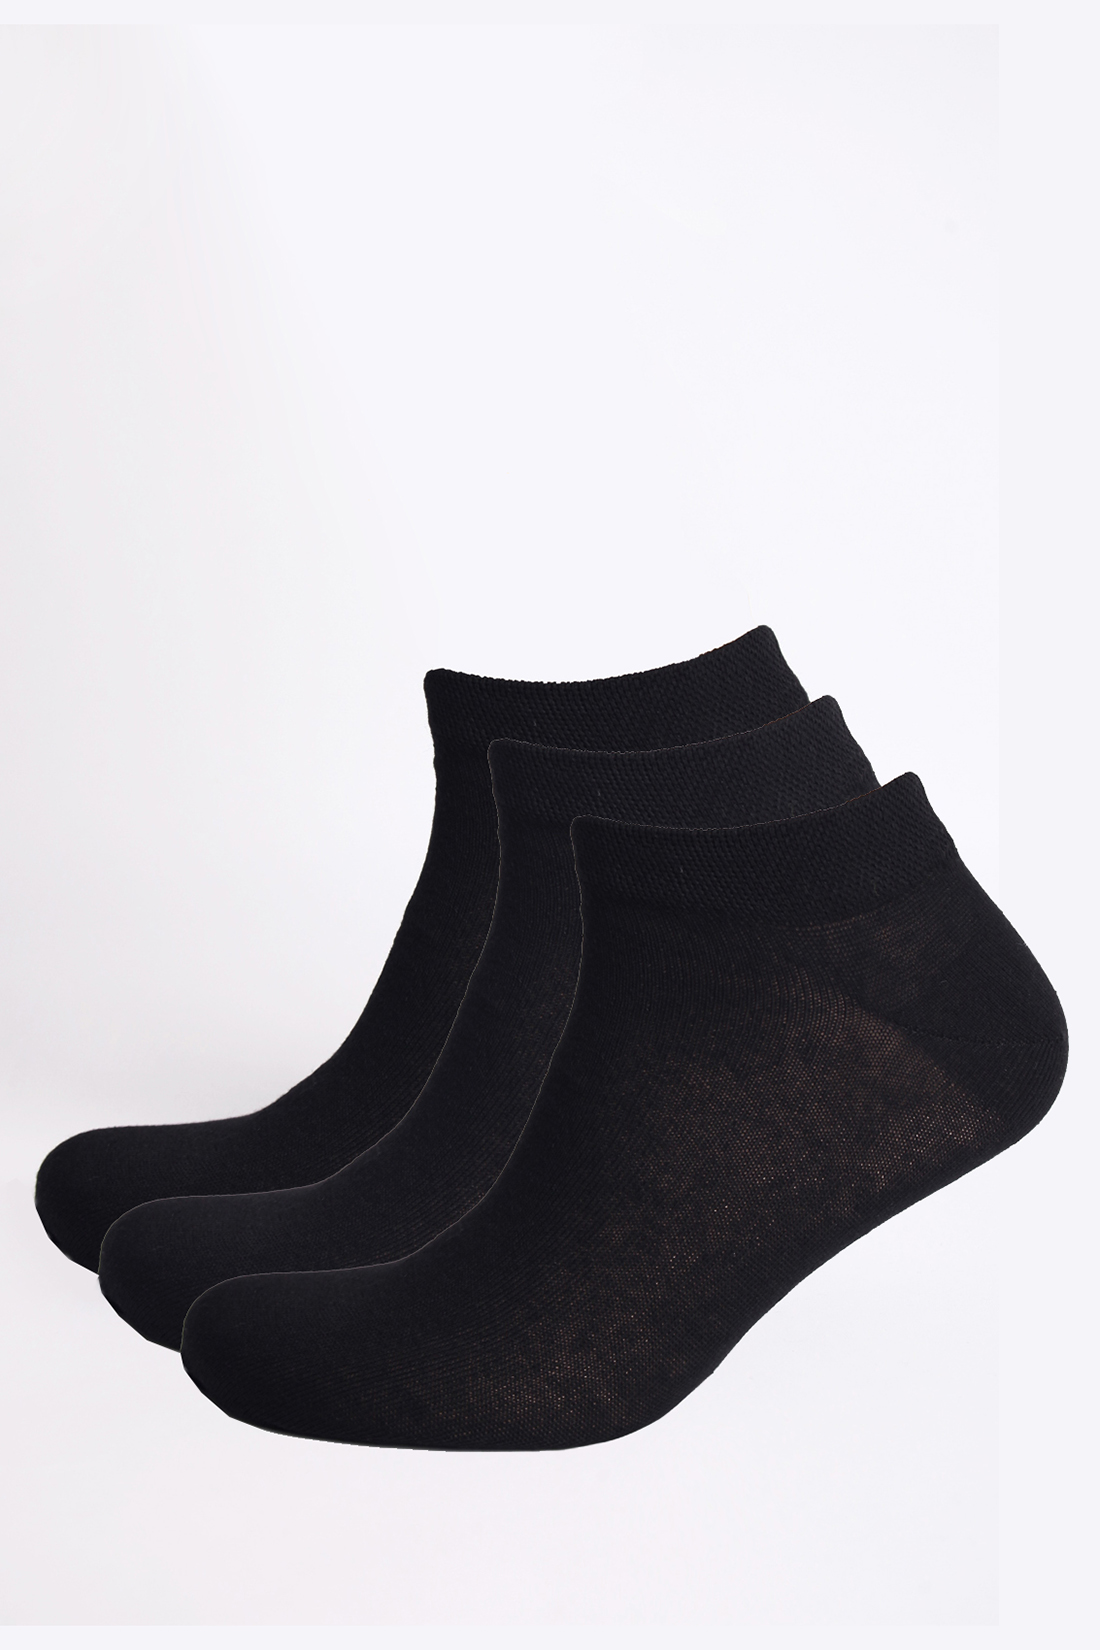 Мужские носки, 3 пары (арт. baon B891203), размер 40/42, цвет черный